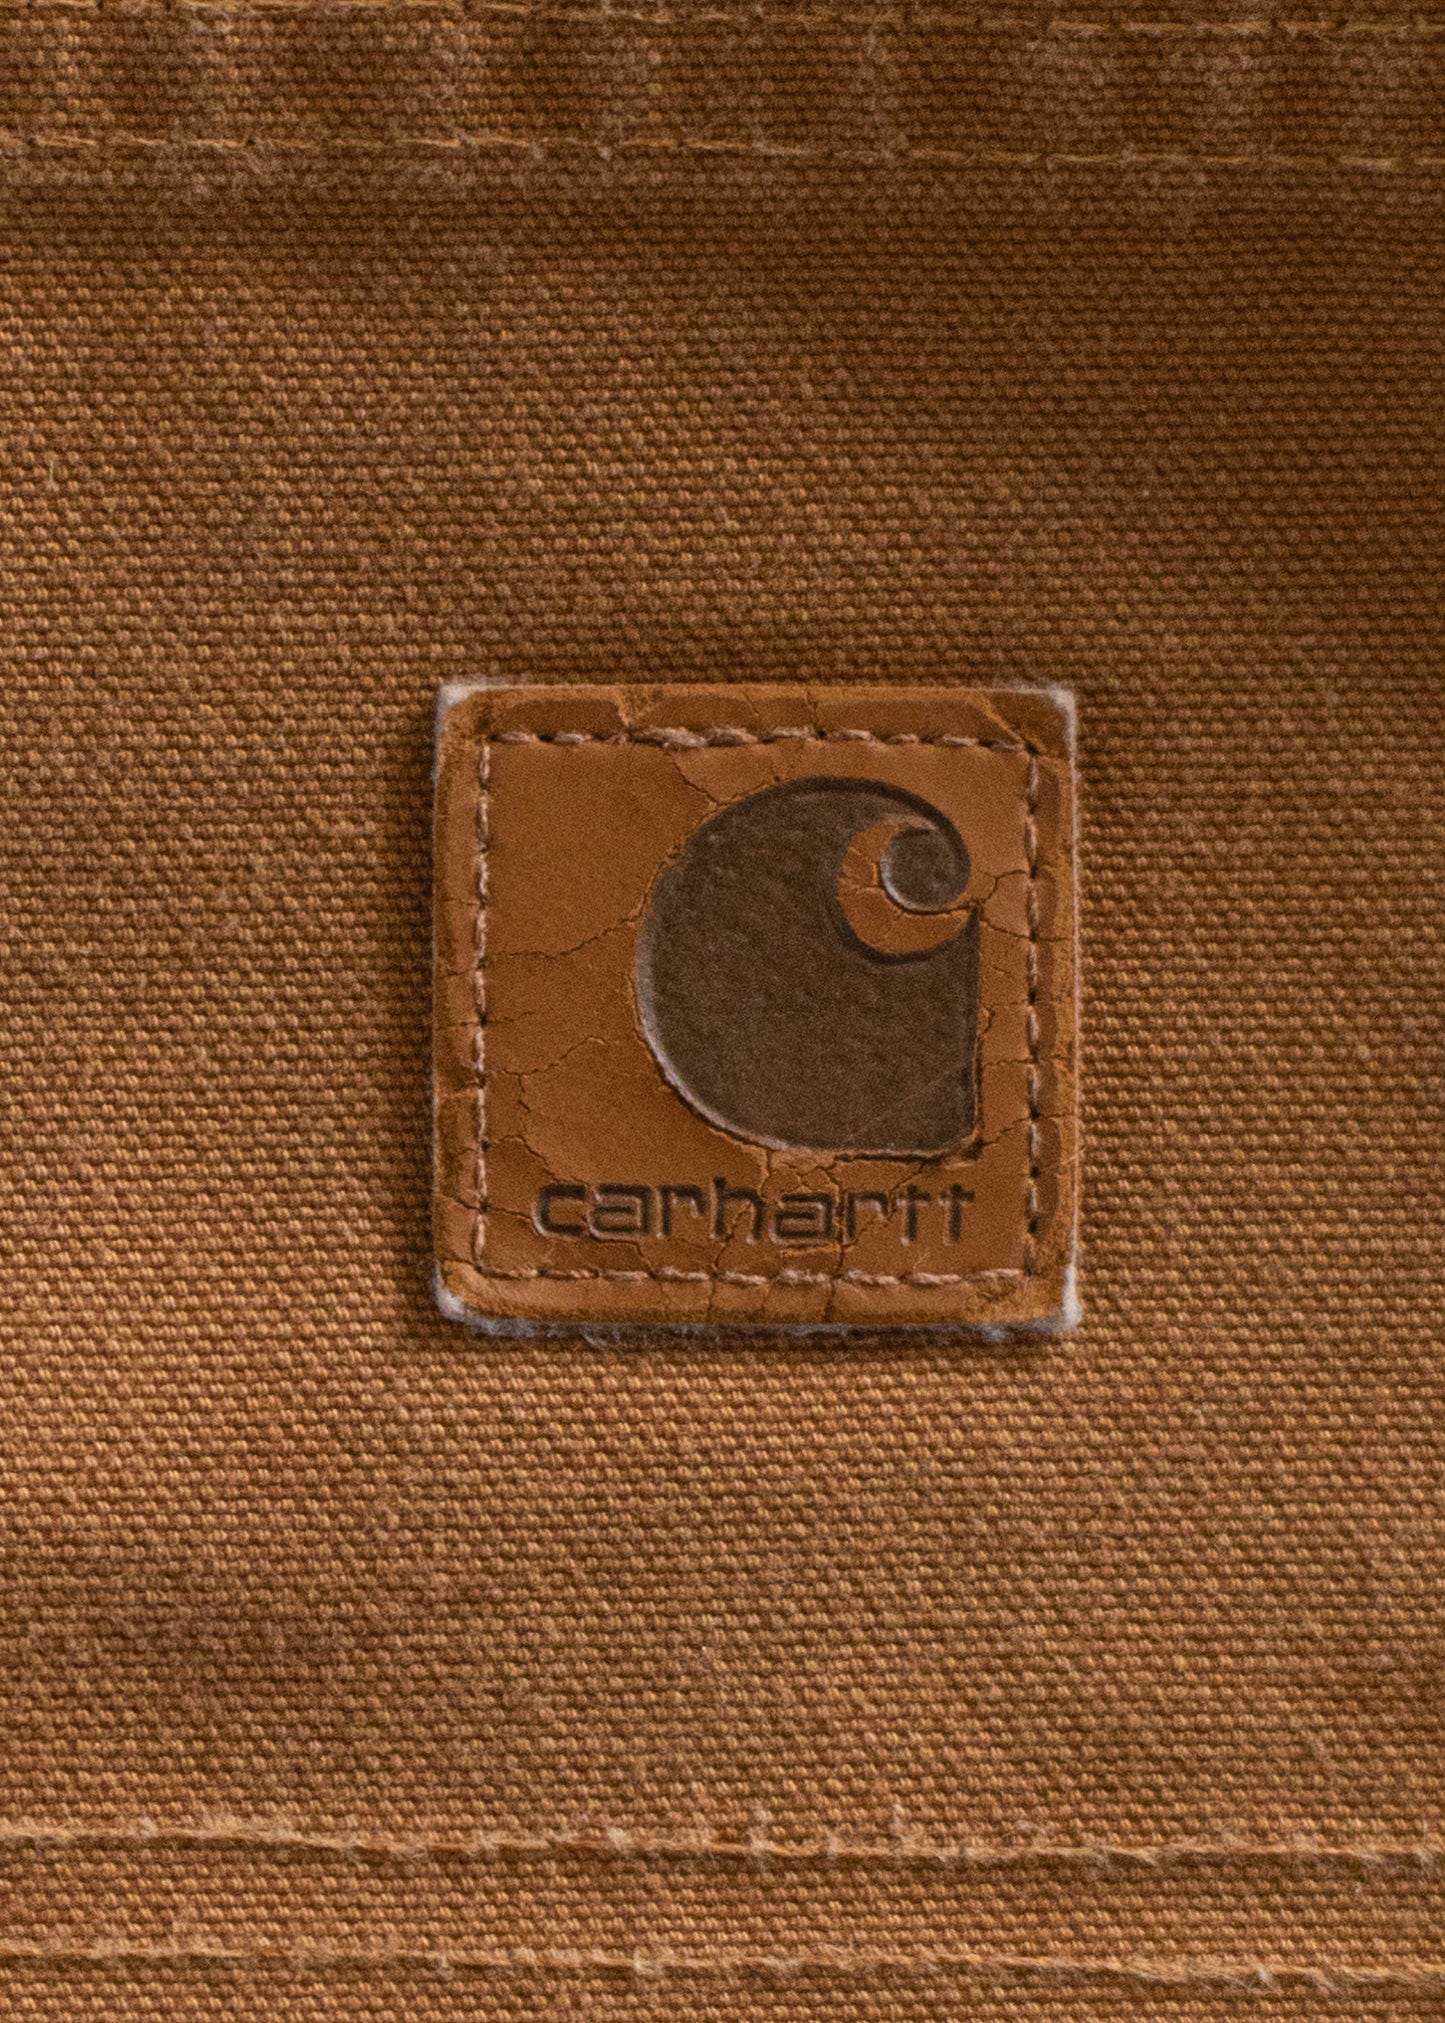 Carhartt Carpenter Pants Size Women's 33 Men's 36